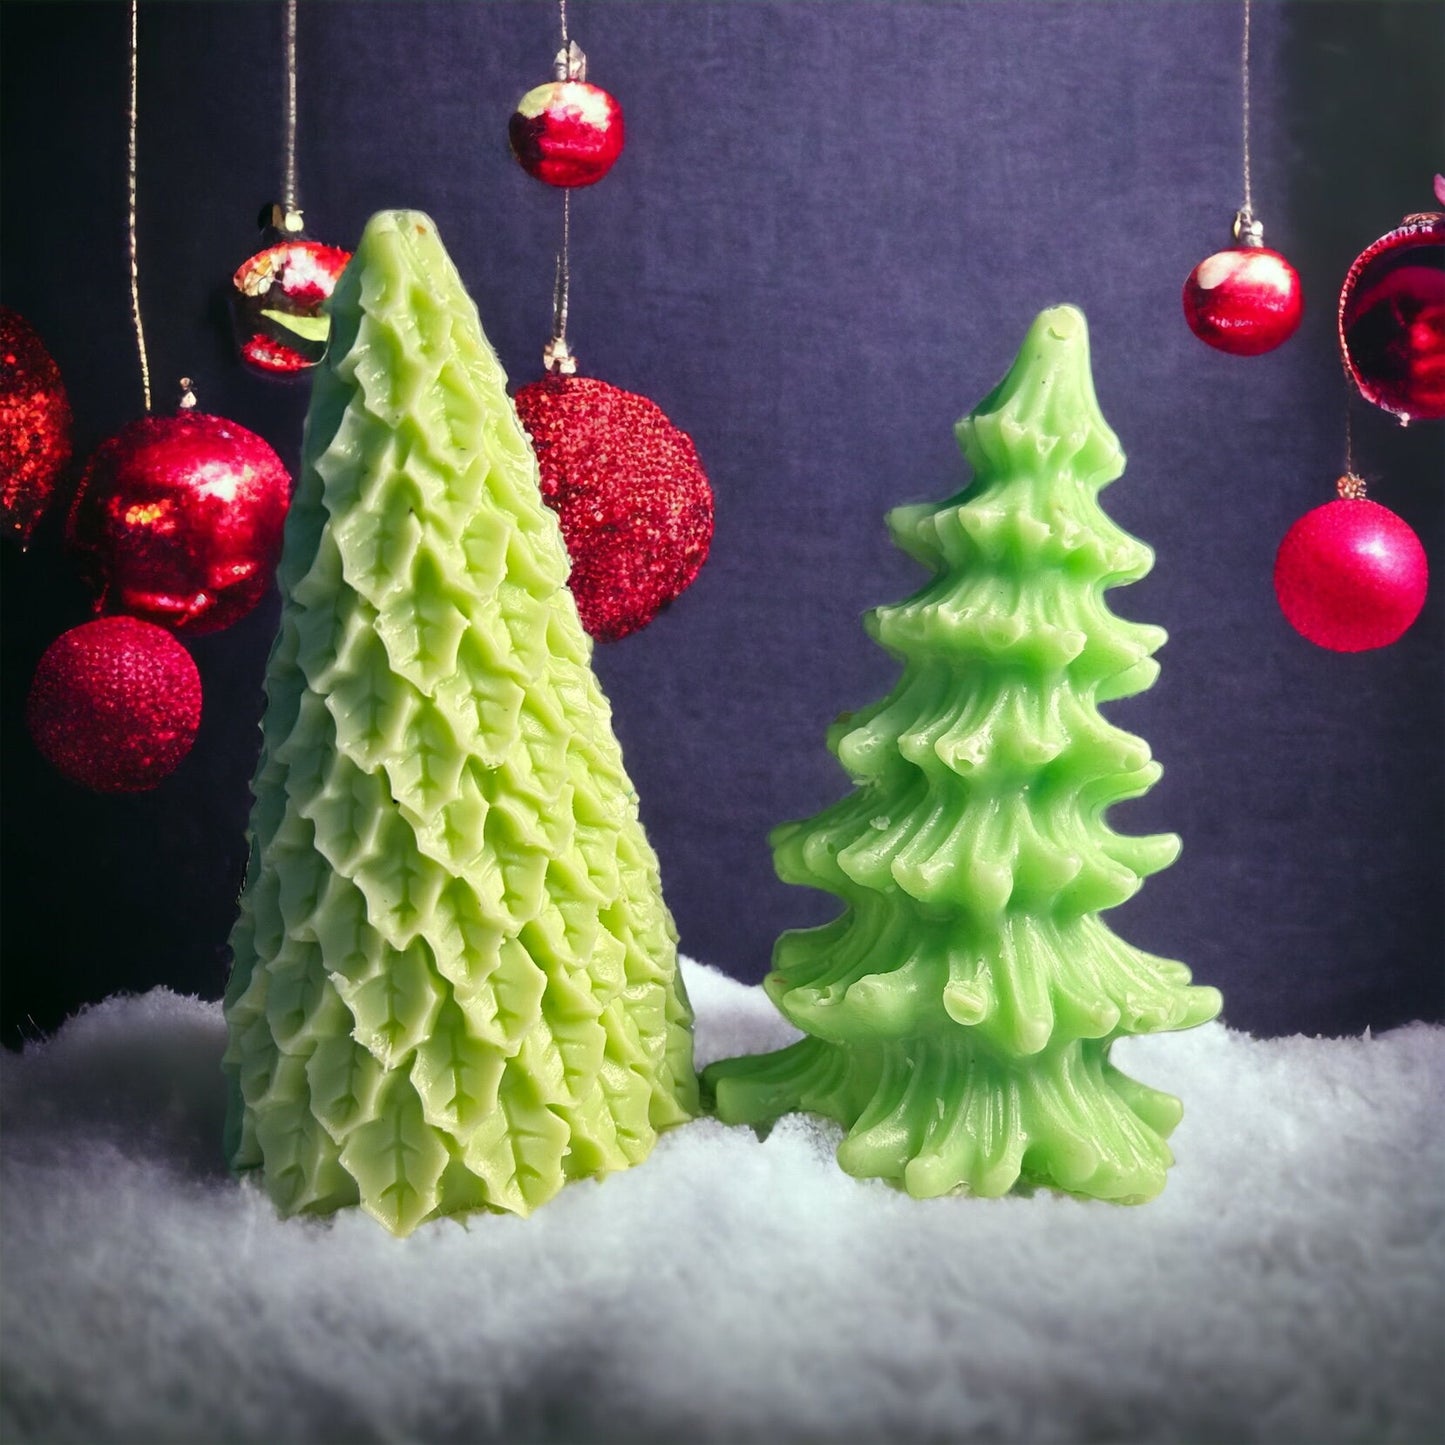 Festive Holiday Christmas Trees